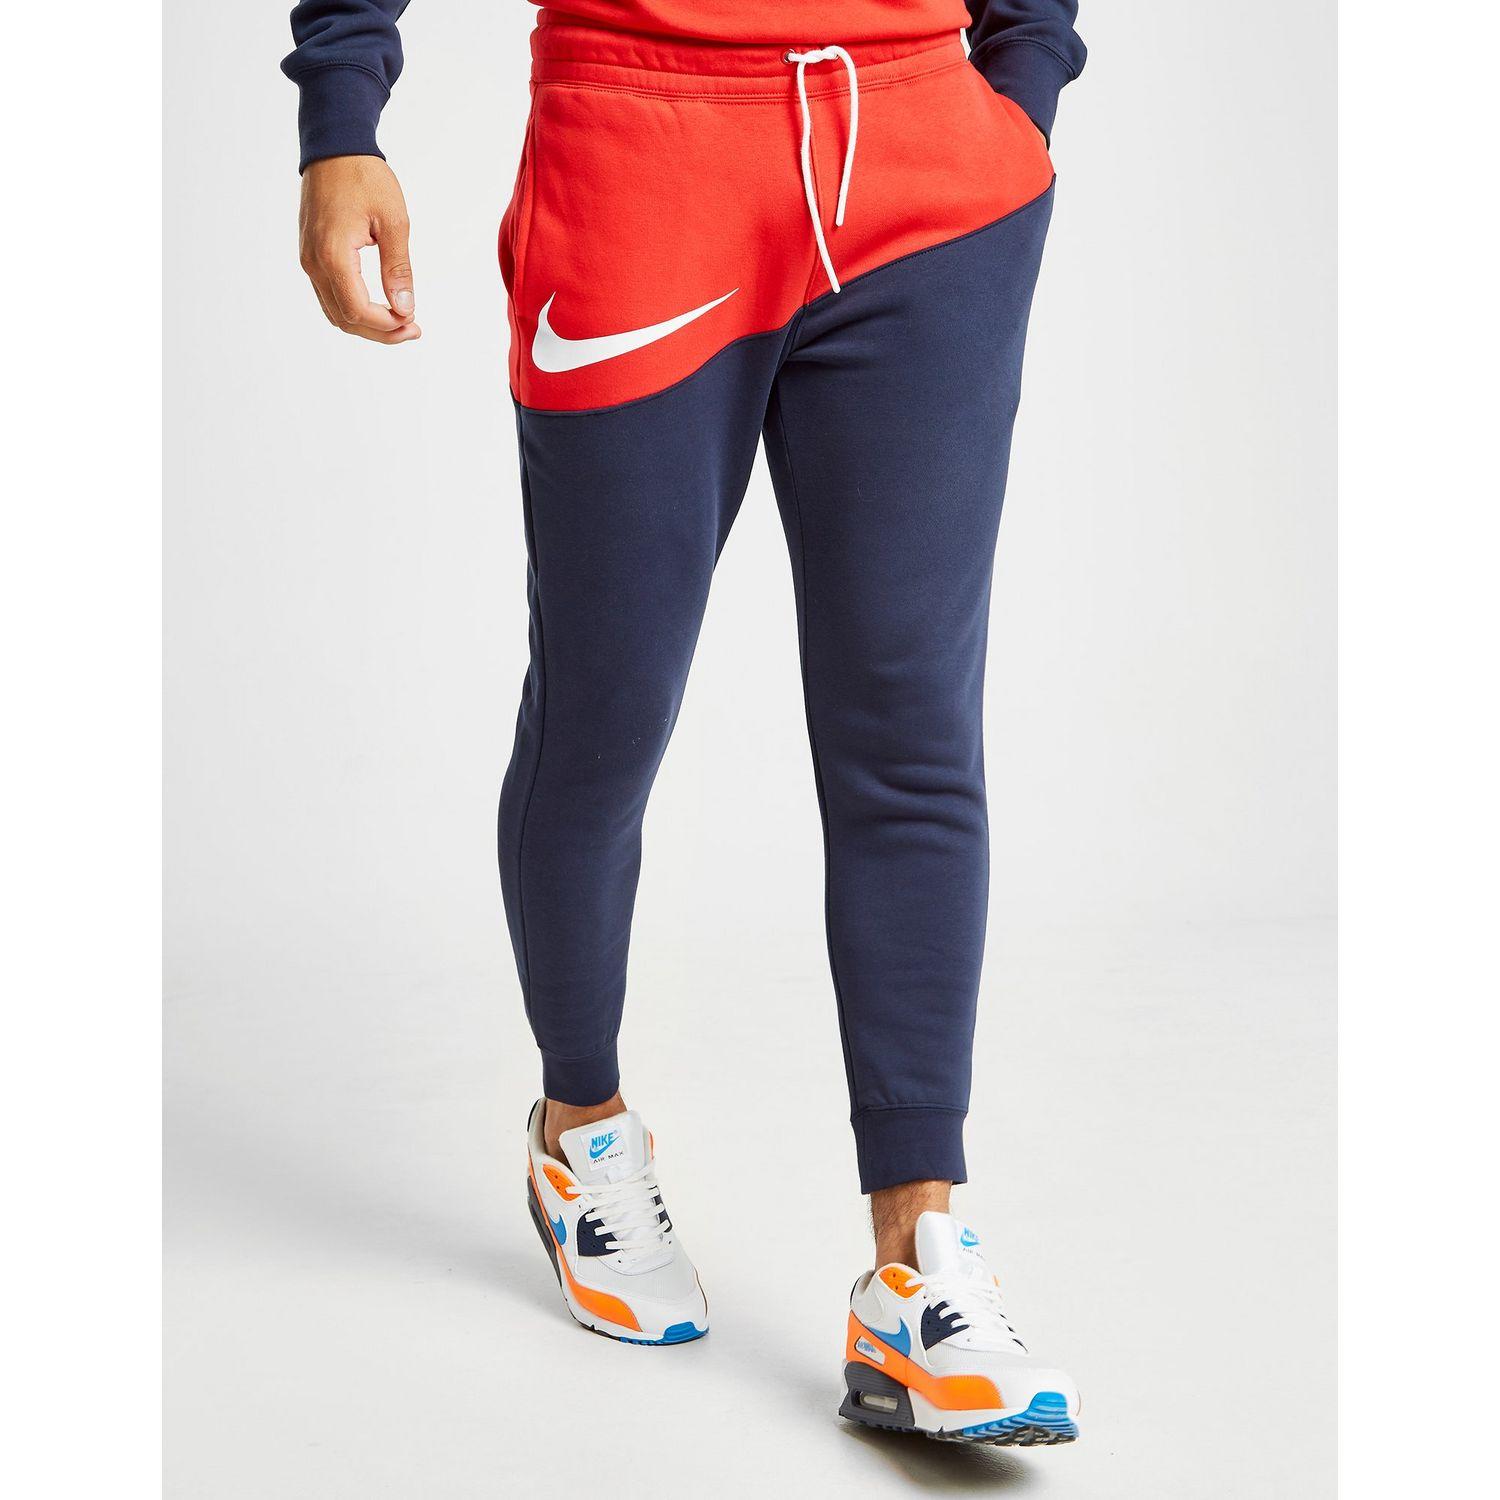 Nike Fleece Swoosh Joggers in Navy/Red (Blue) for Men - Lyst